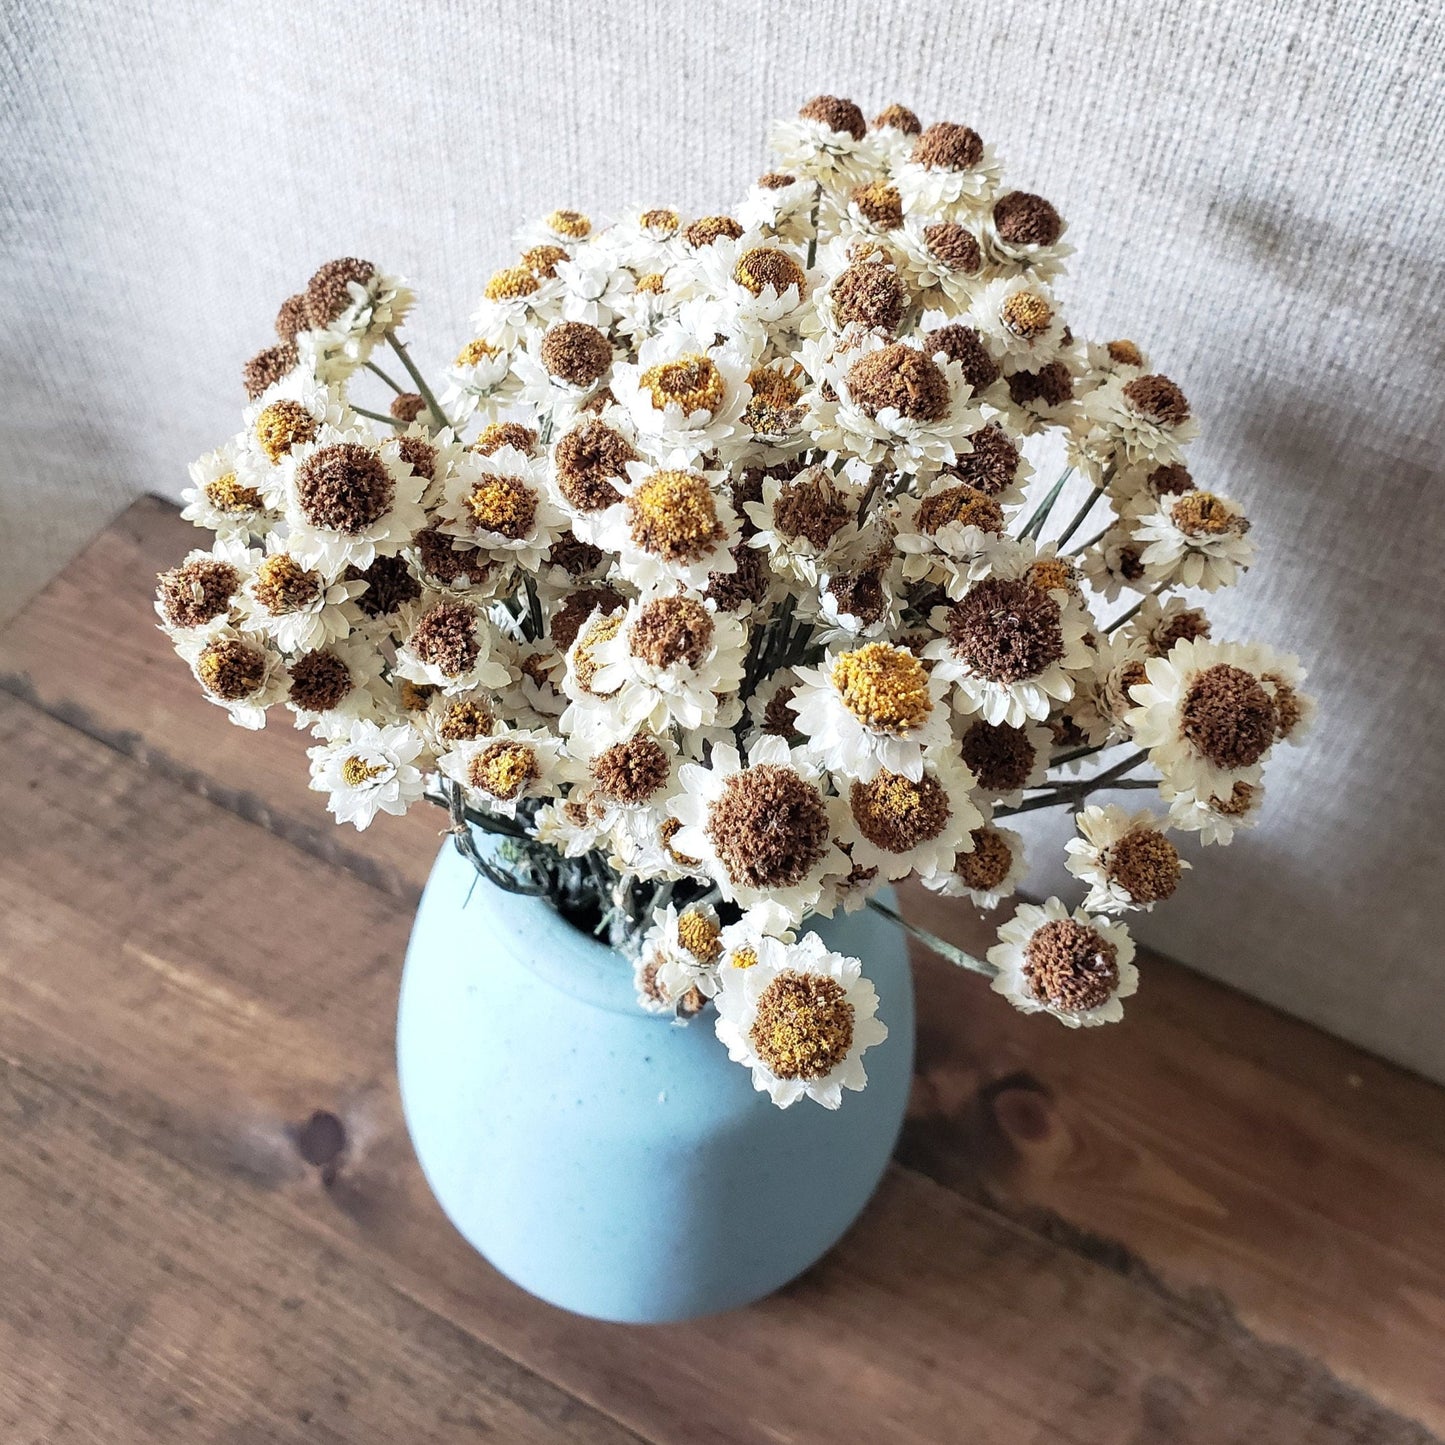 Dried Ammobium Daisy-like flower